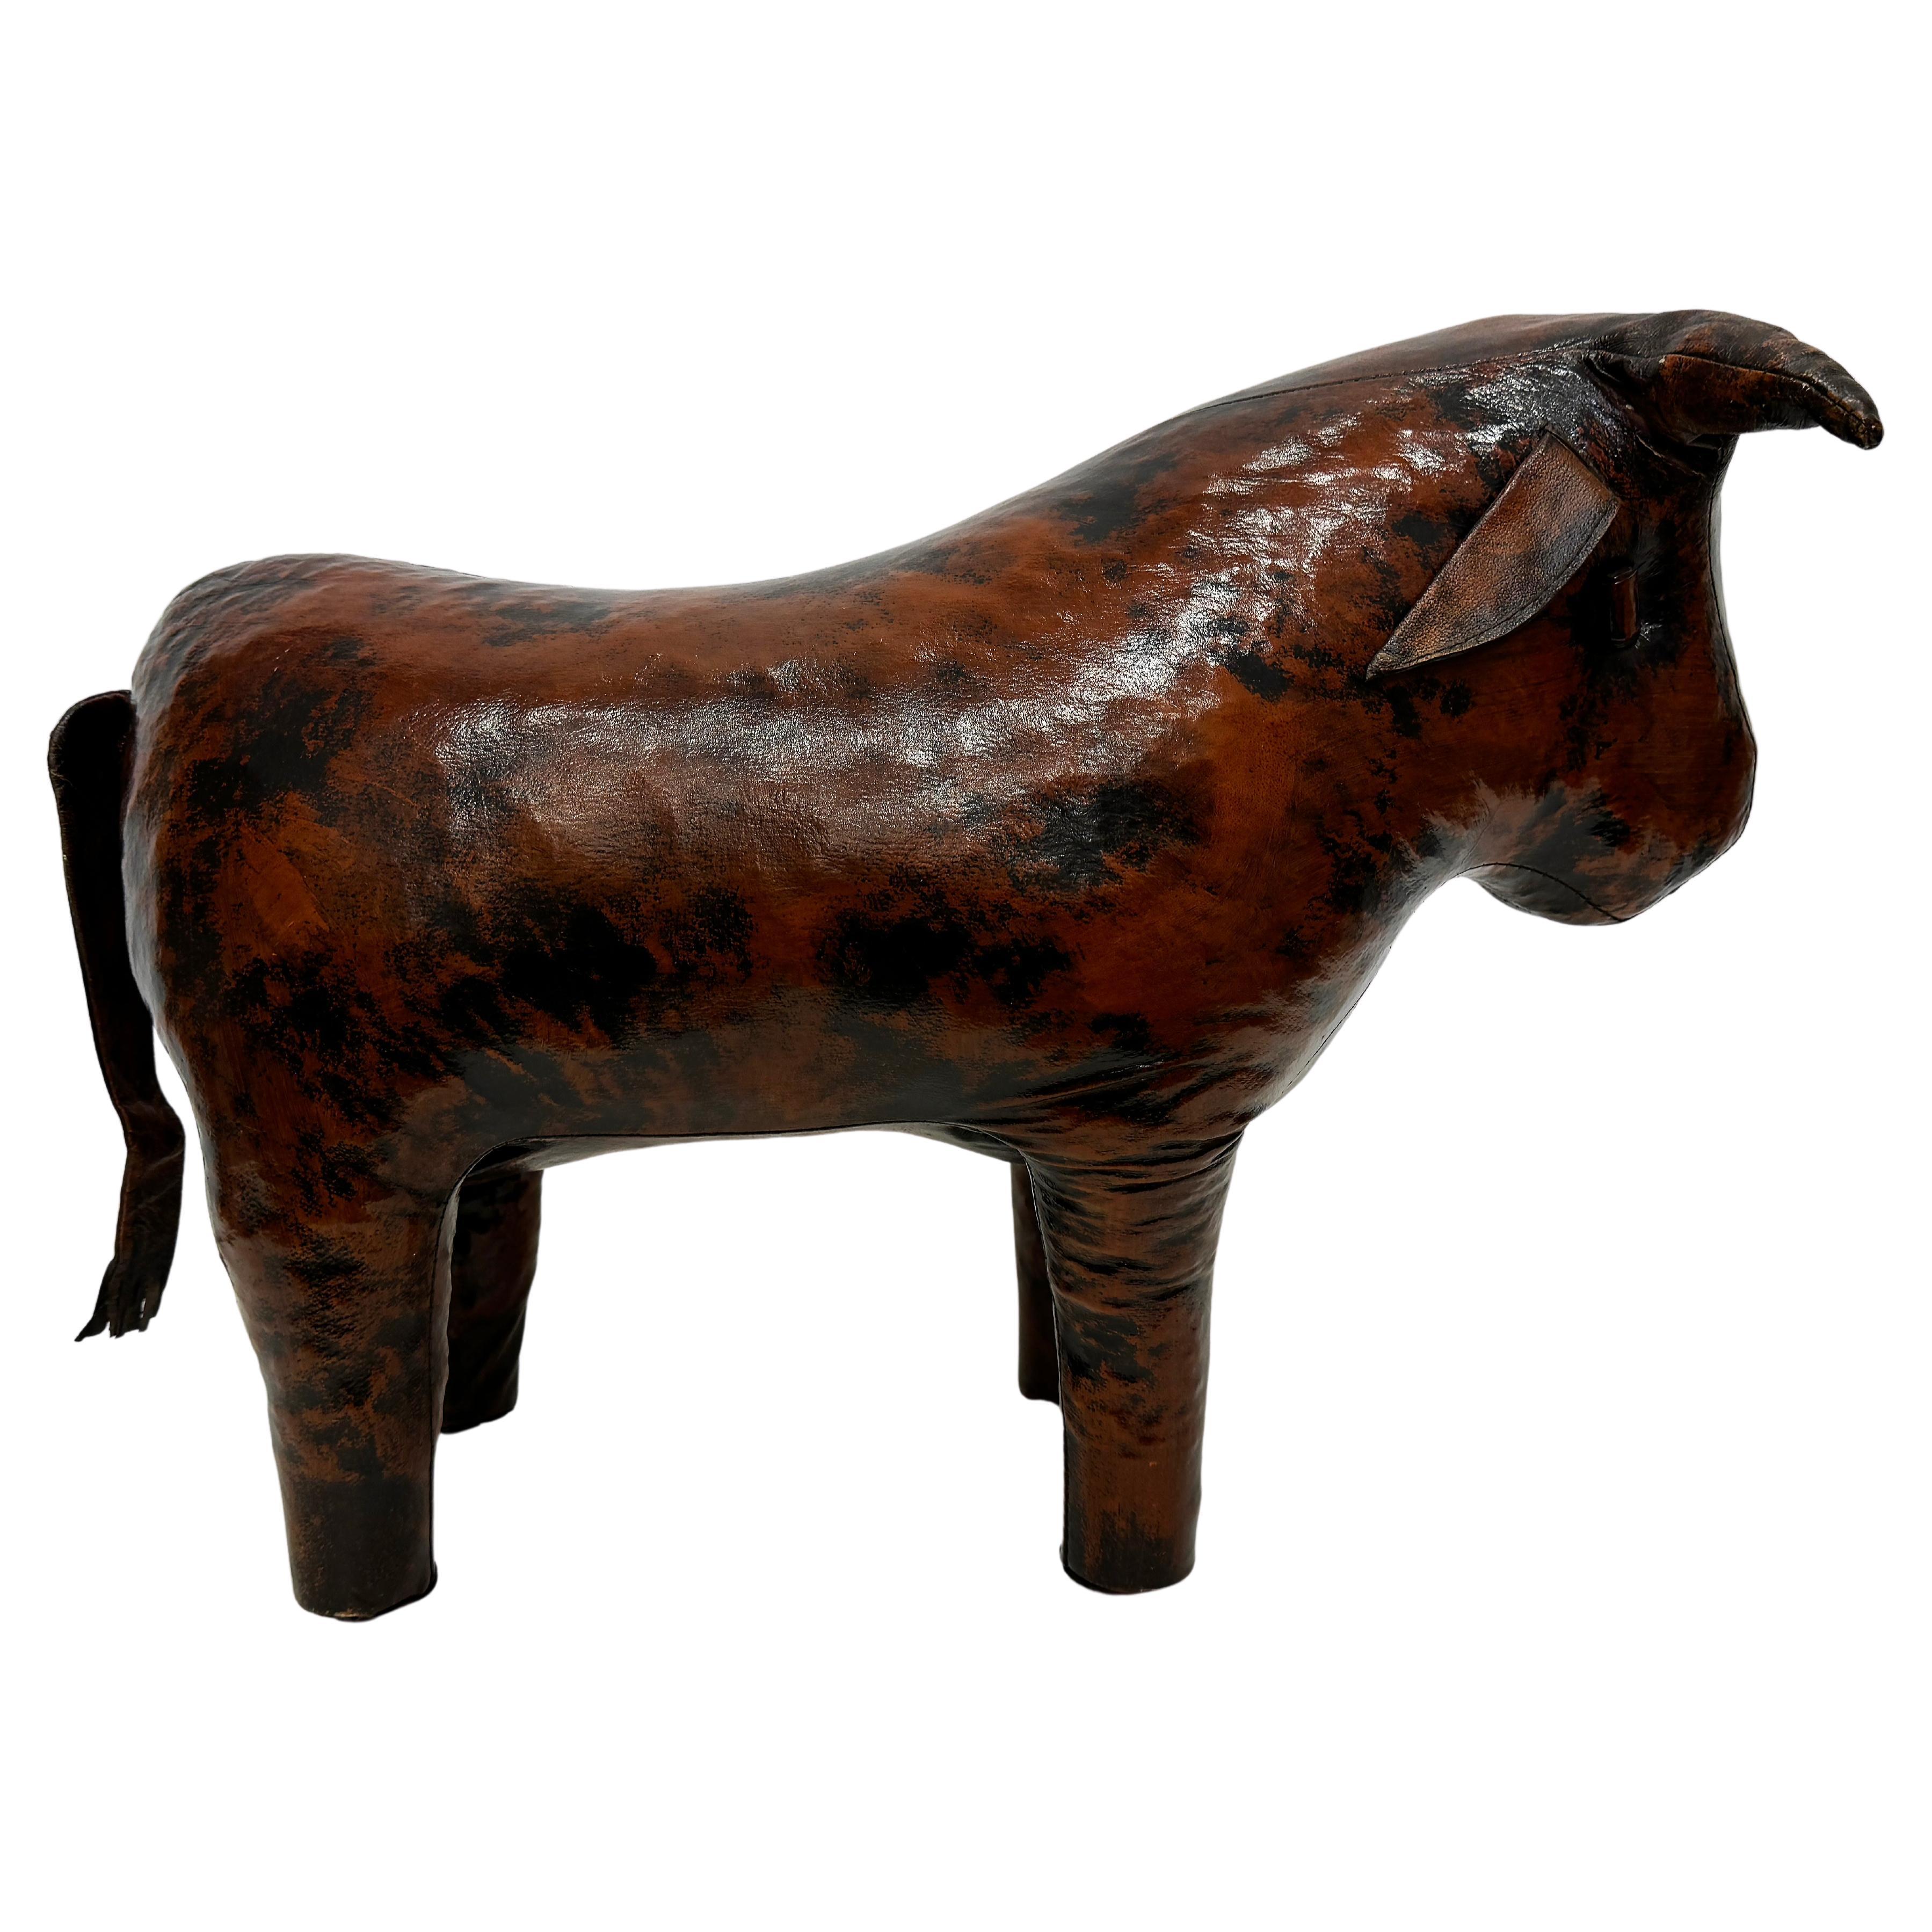  Mid-century Dimitri Omersa for Valenti Home Bull Ottoman For Sale